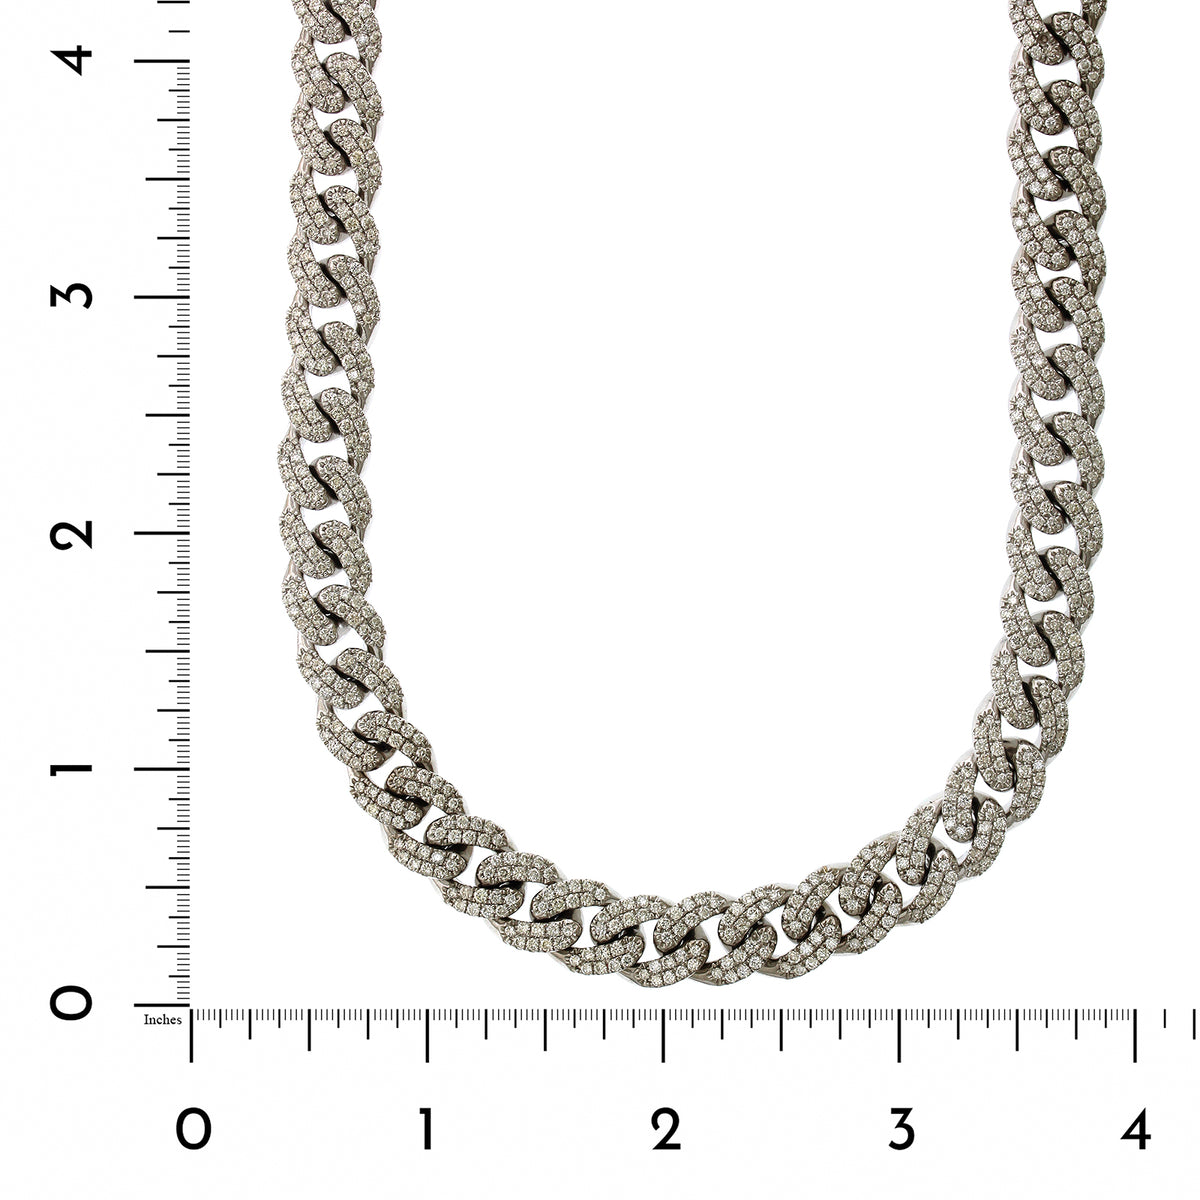 14K White Gold Pave Diamond Curb Chain